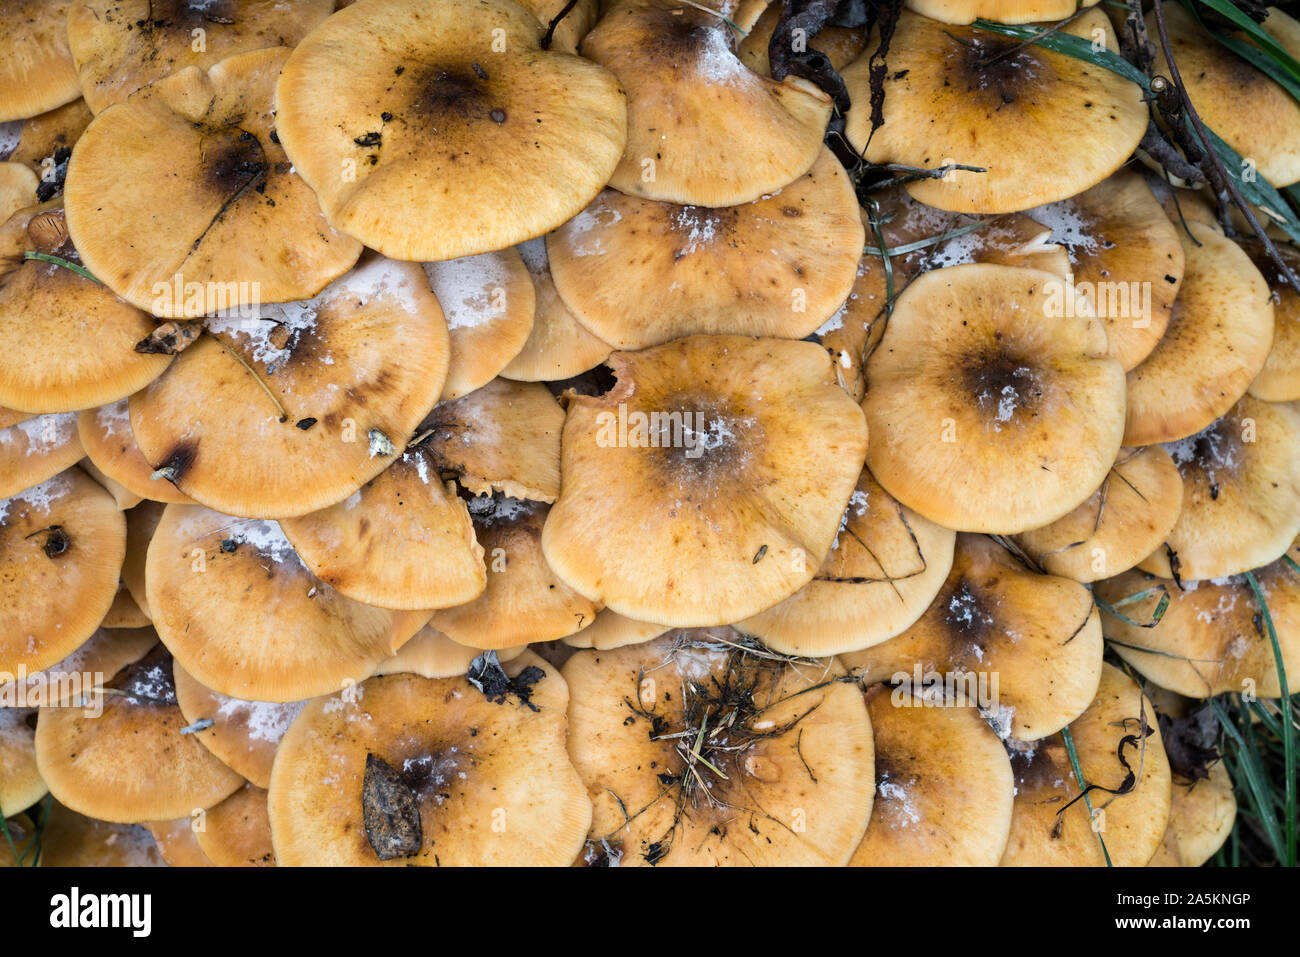 Armillaria, parasitic fungi, Germany, Europe Stock Photo